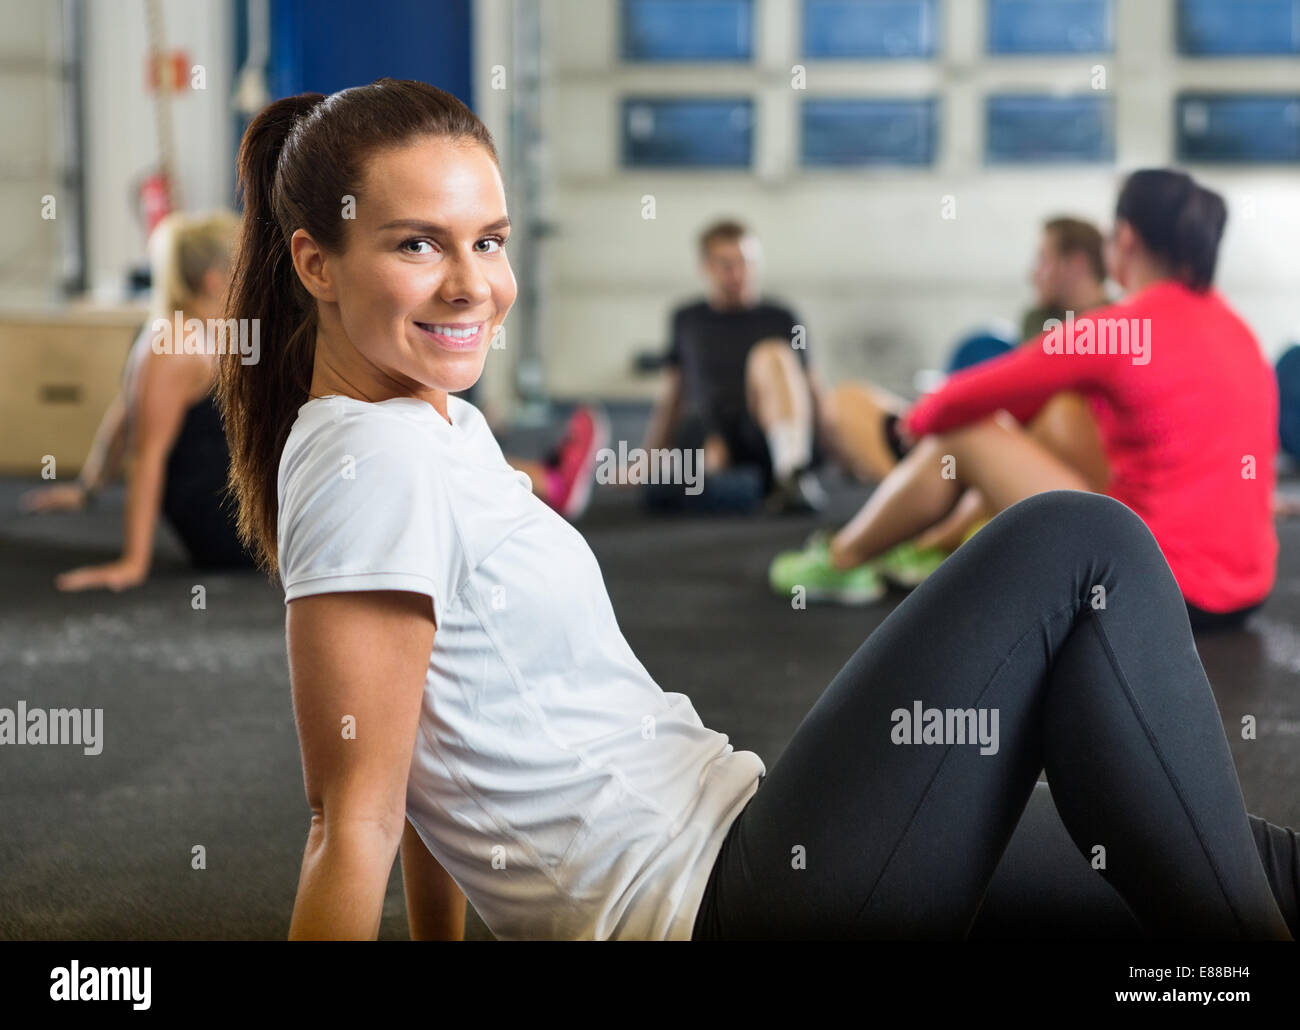 Smiling Woman Exercising In Cross Training Box Stock Photo